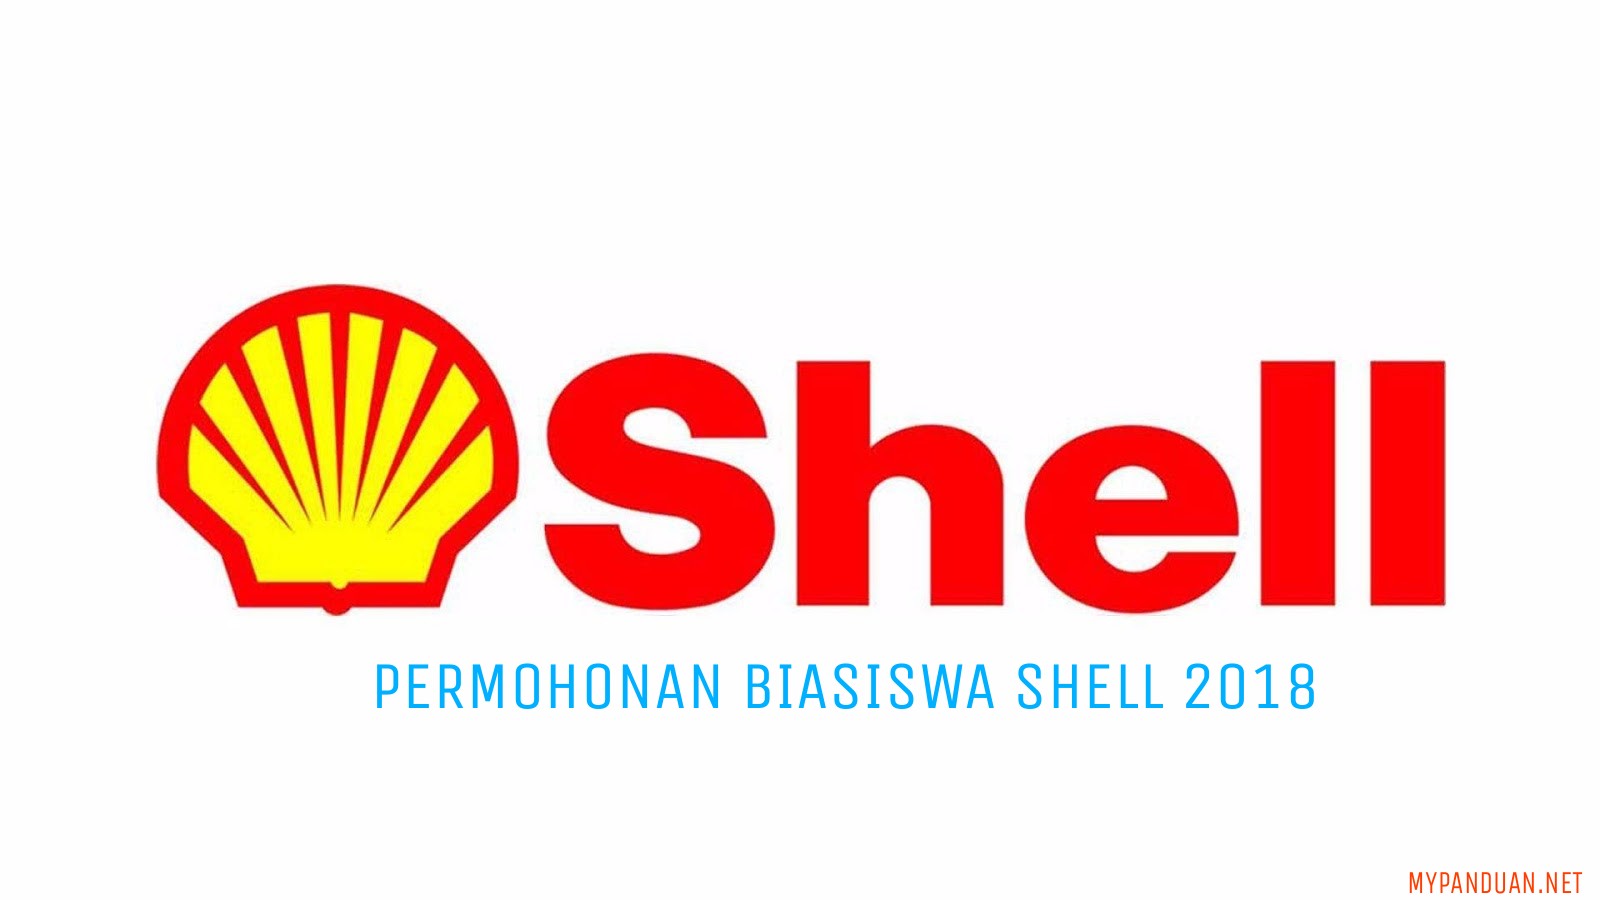 Permohonan Biasiswa Shell Malaysia 2018 Online